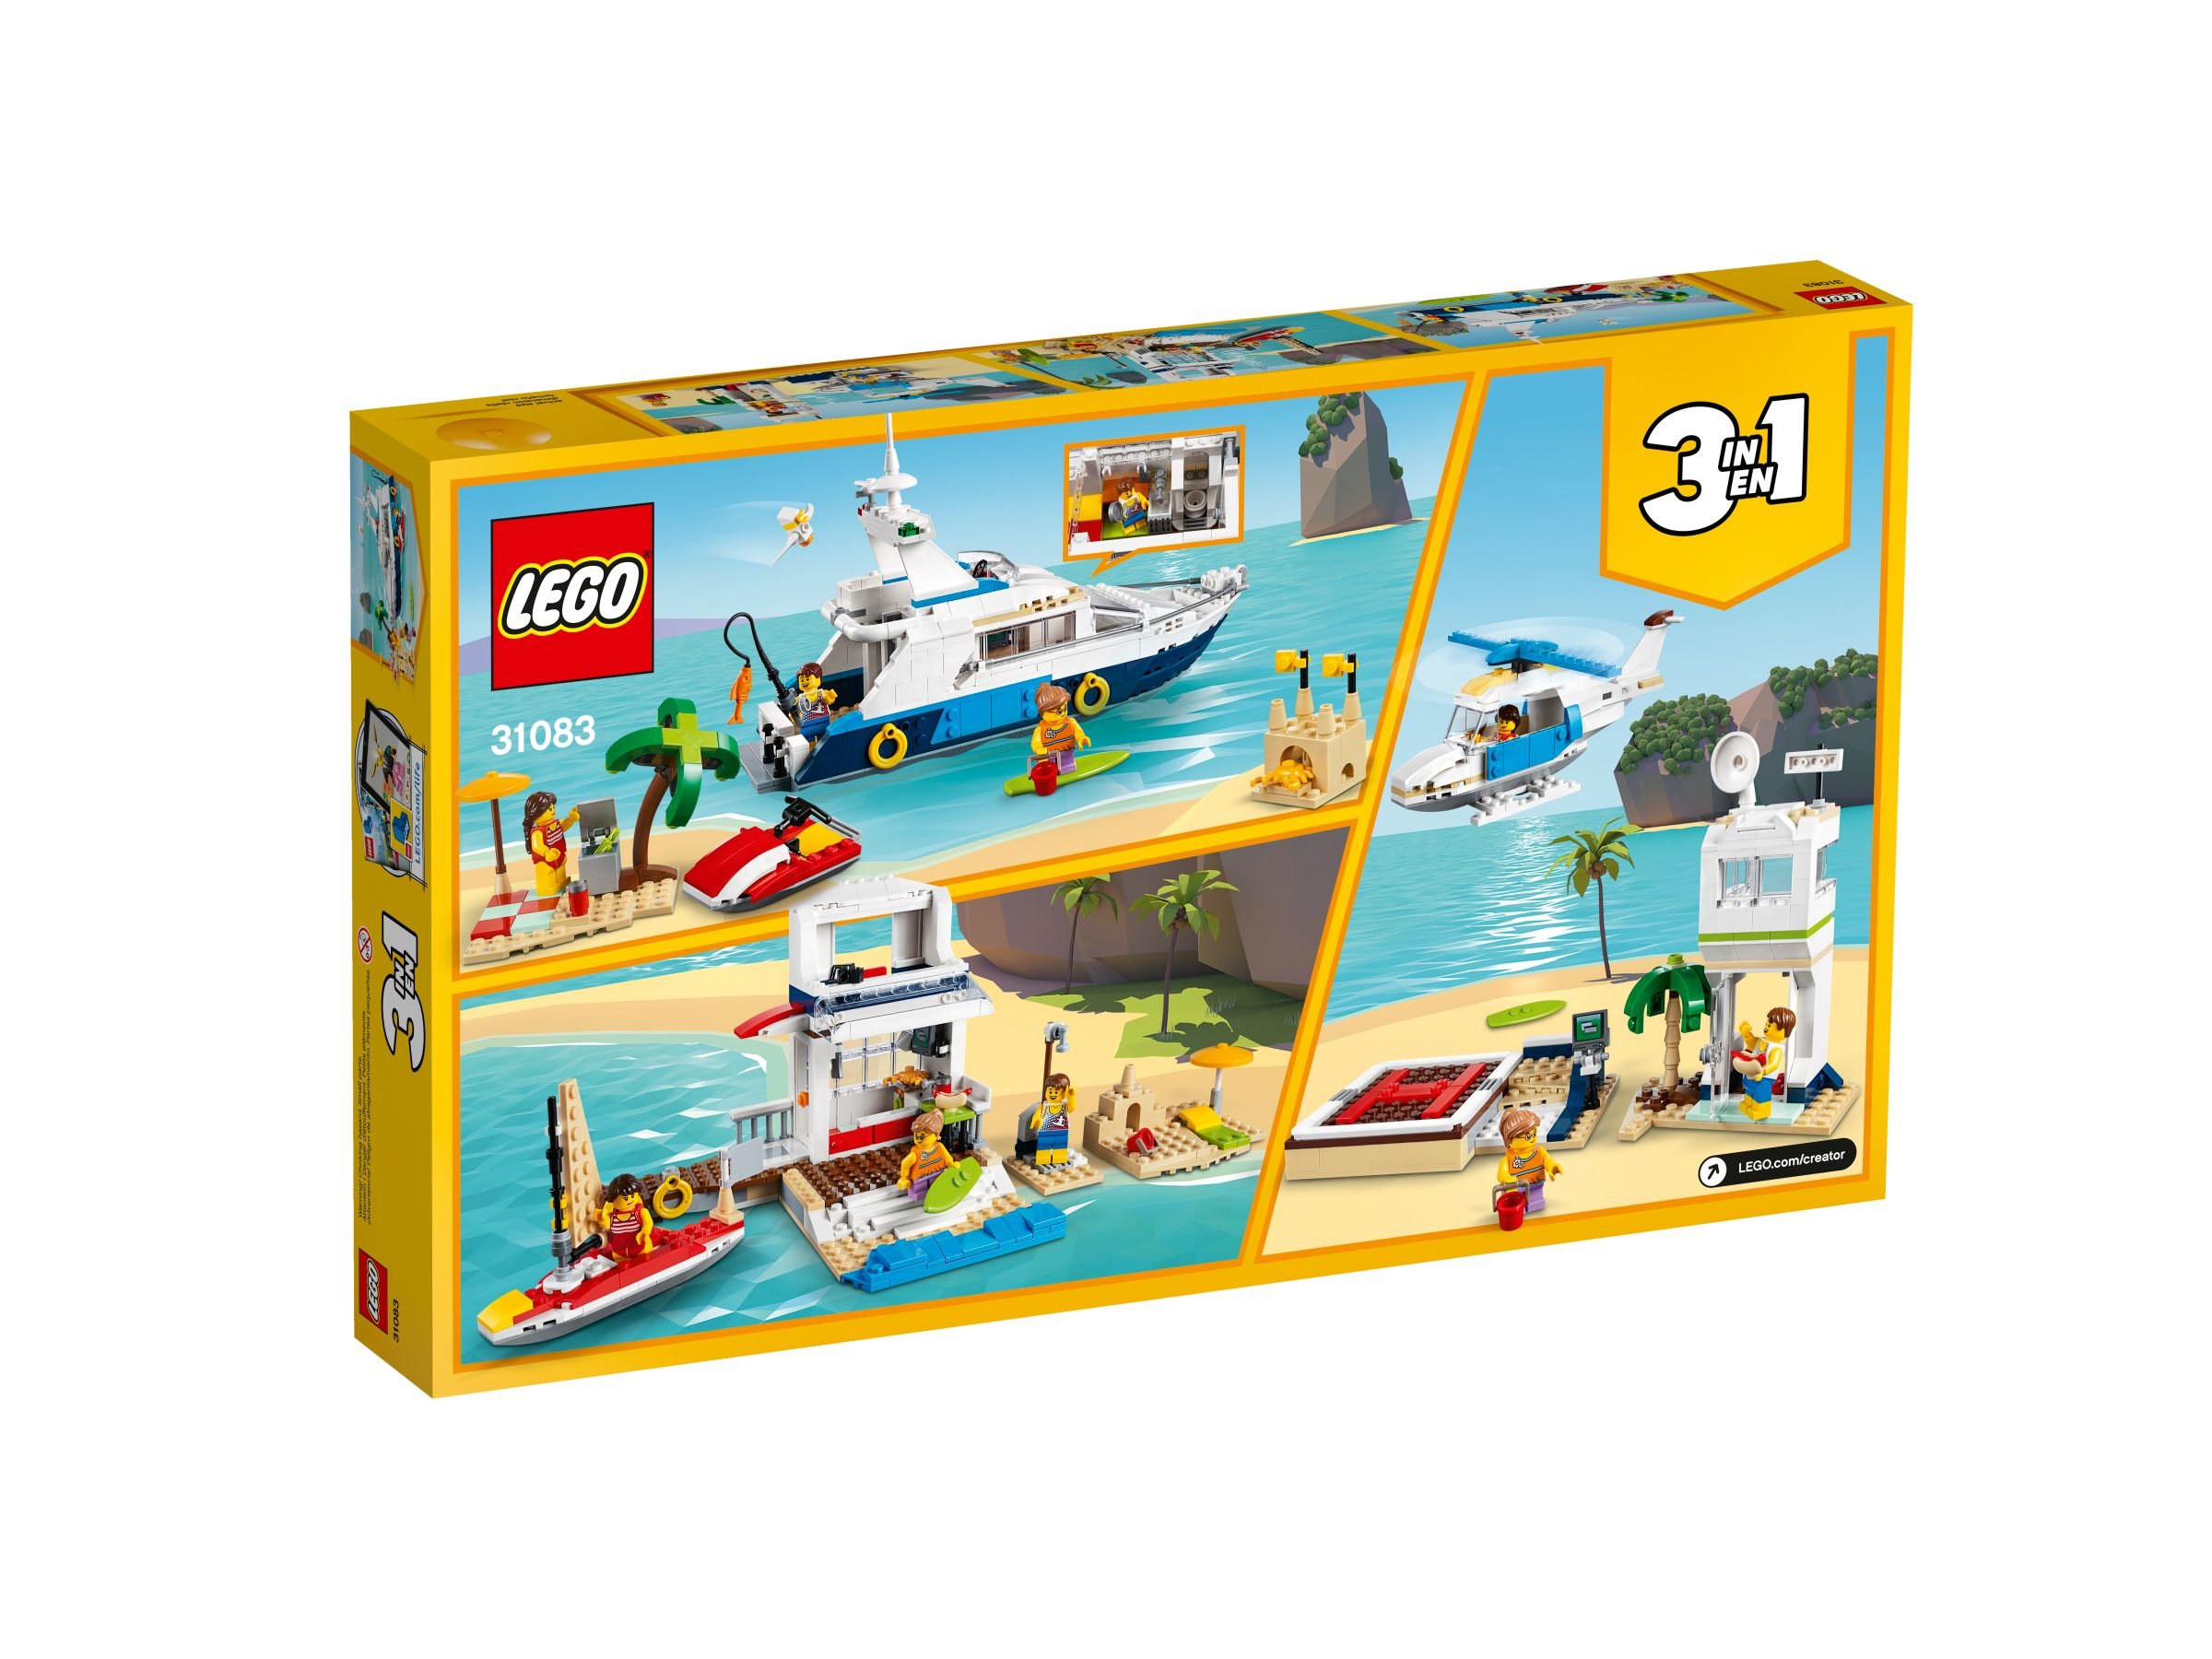 LEGO Creator 31083 Yacht LEGO_31083_alt4.jpg